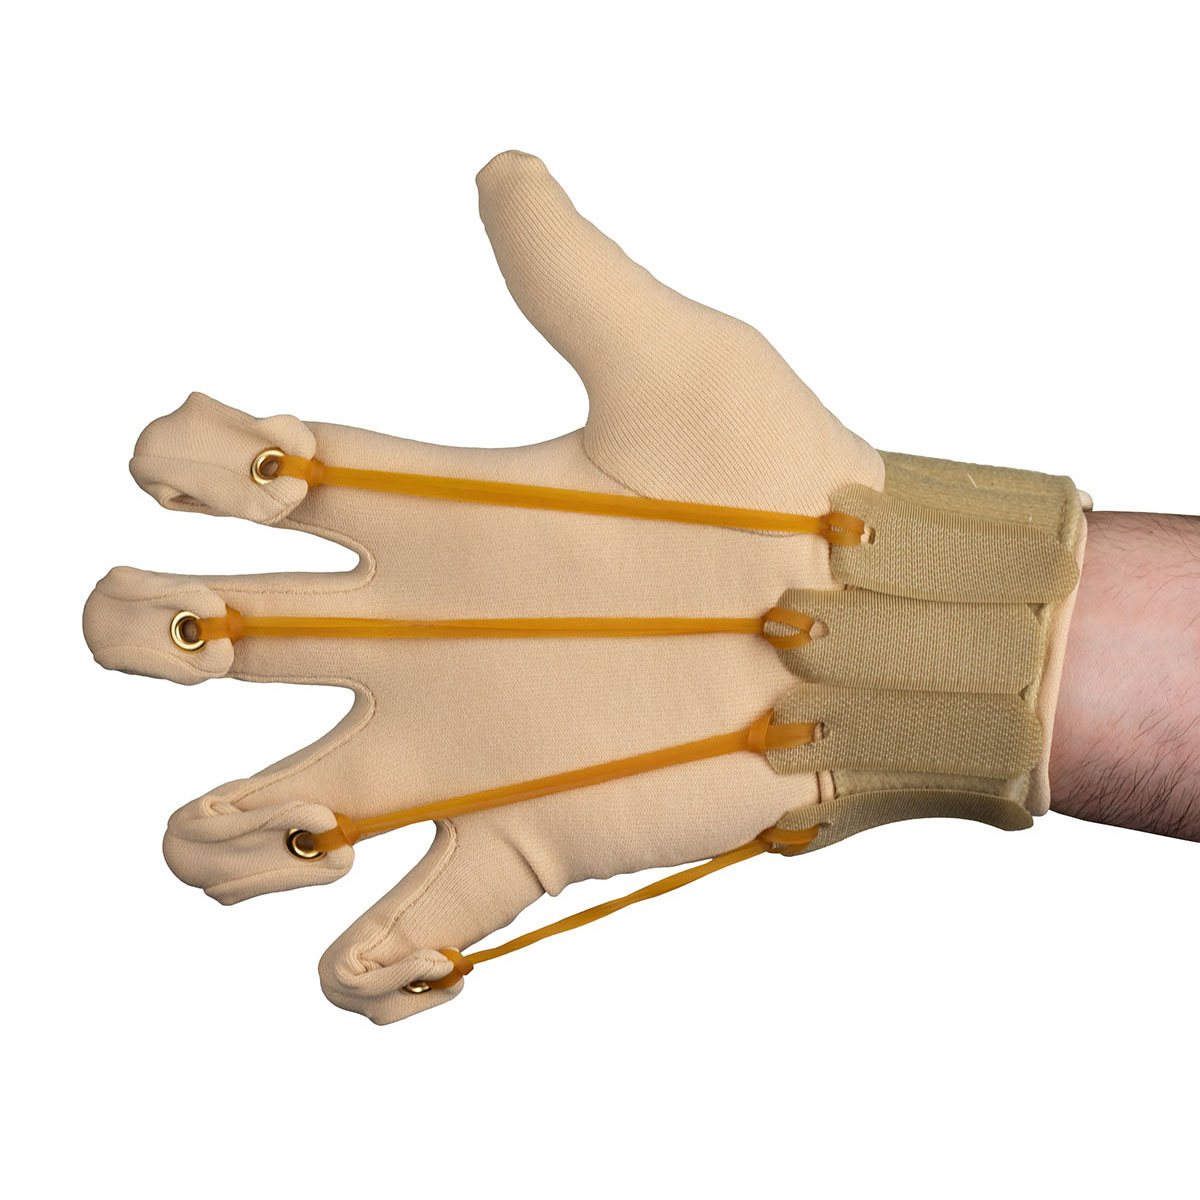 CanDo手指屈曲训练手套-弹力橡胶手套